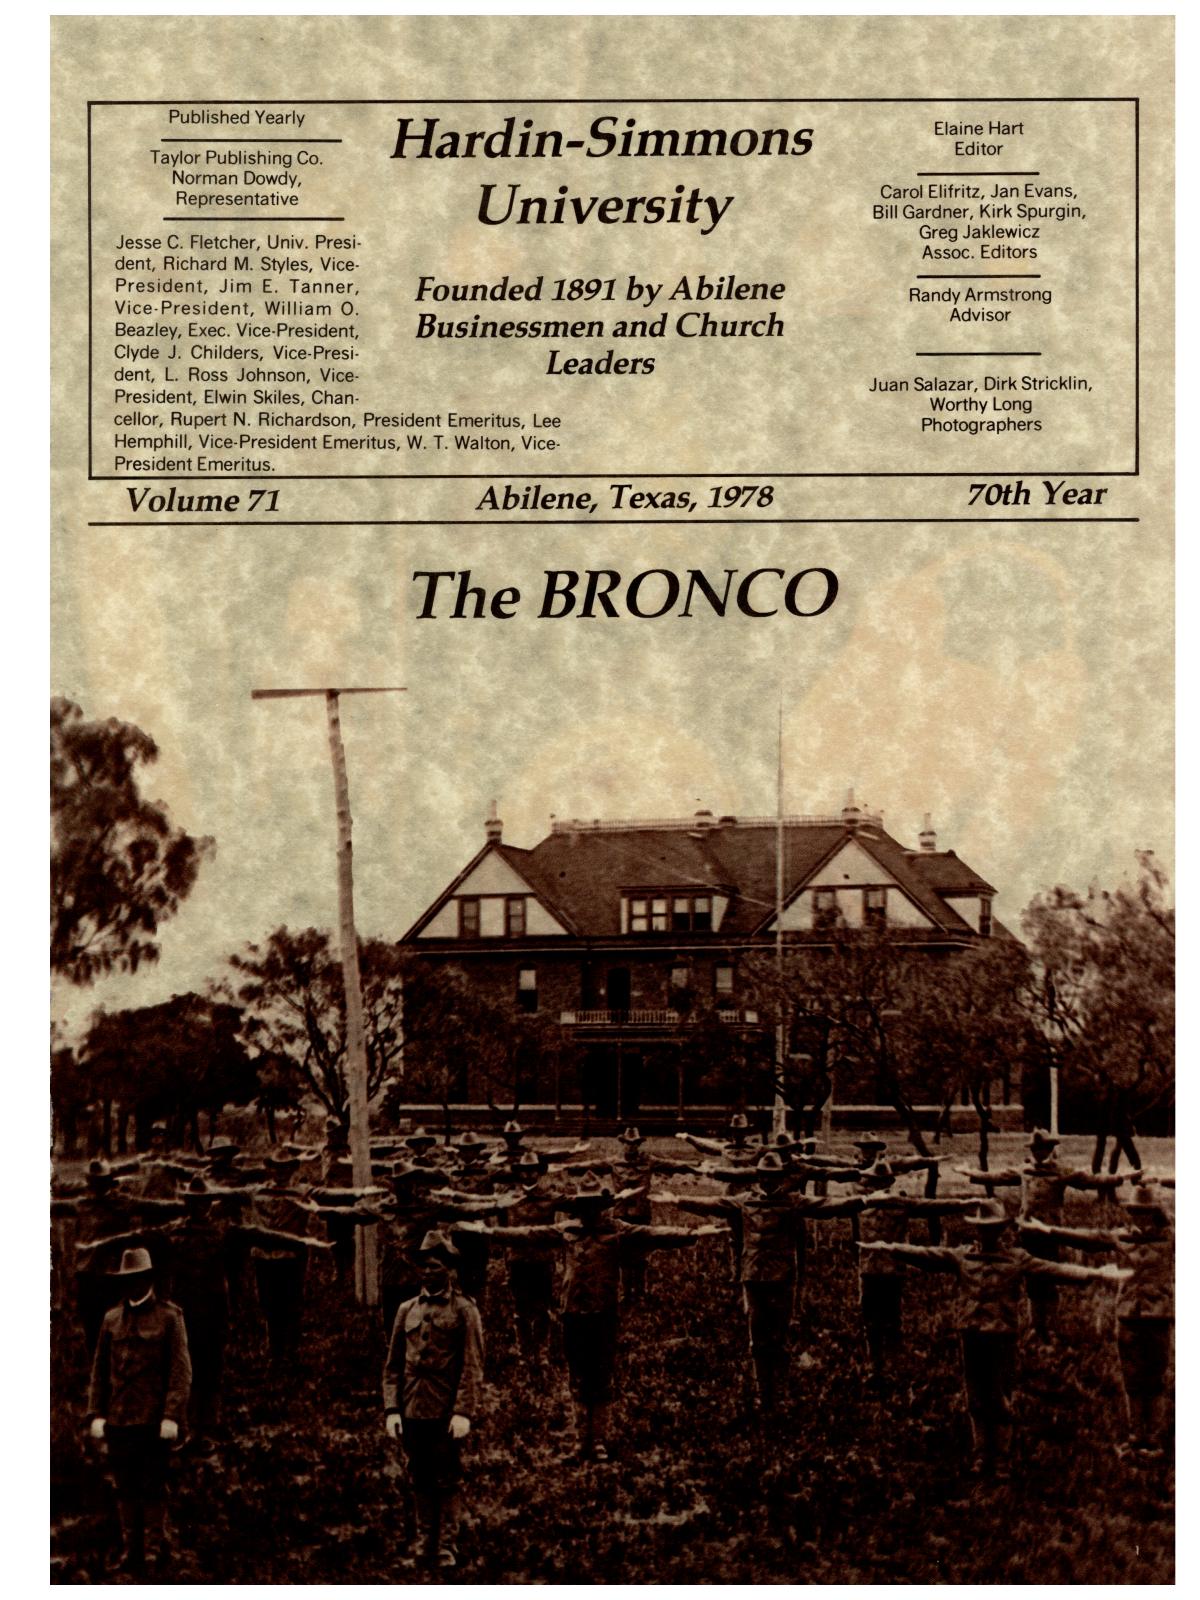 The Bronco, Yearbook of Hardin-Simmons University, 1978
                                                
                                                    1
                                                